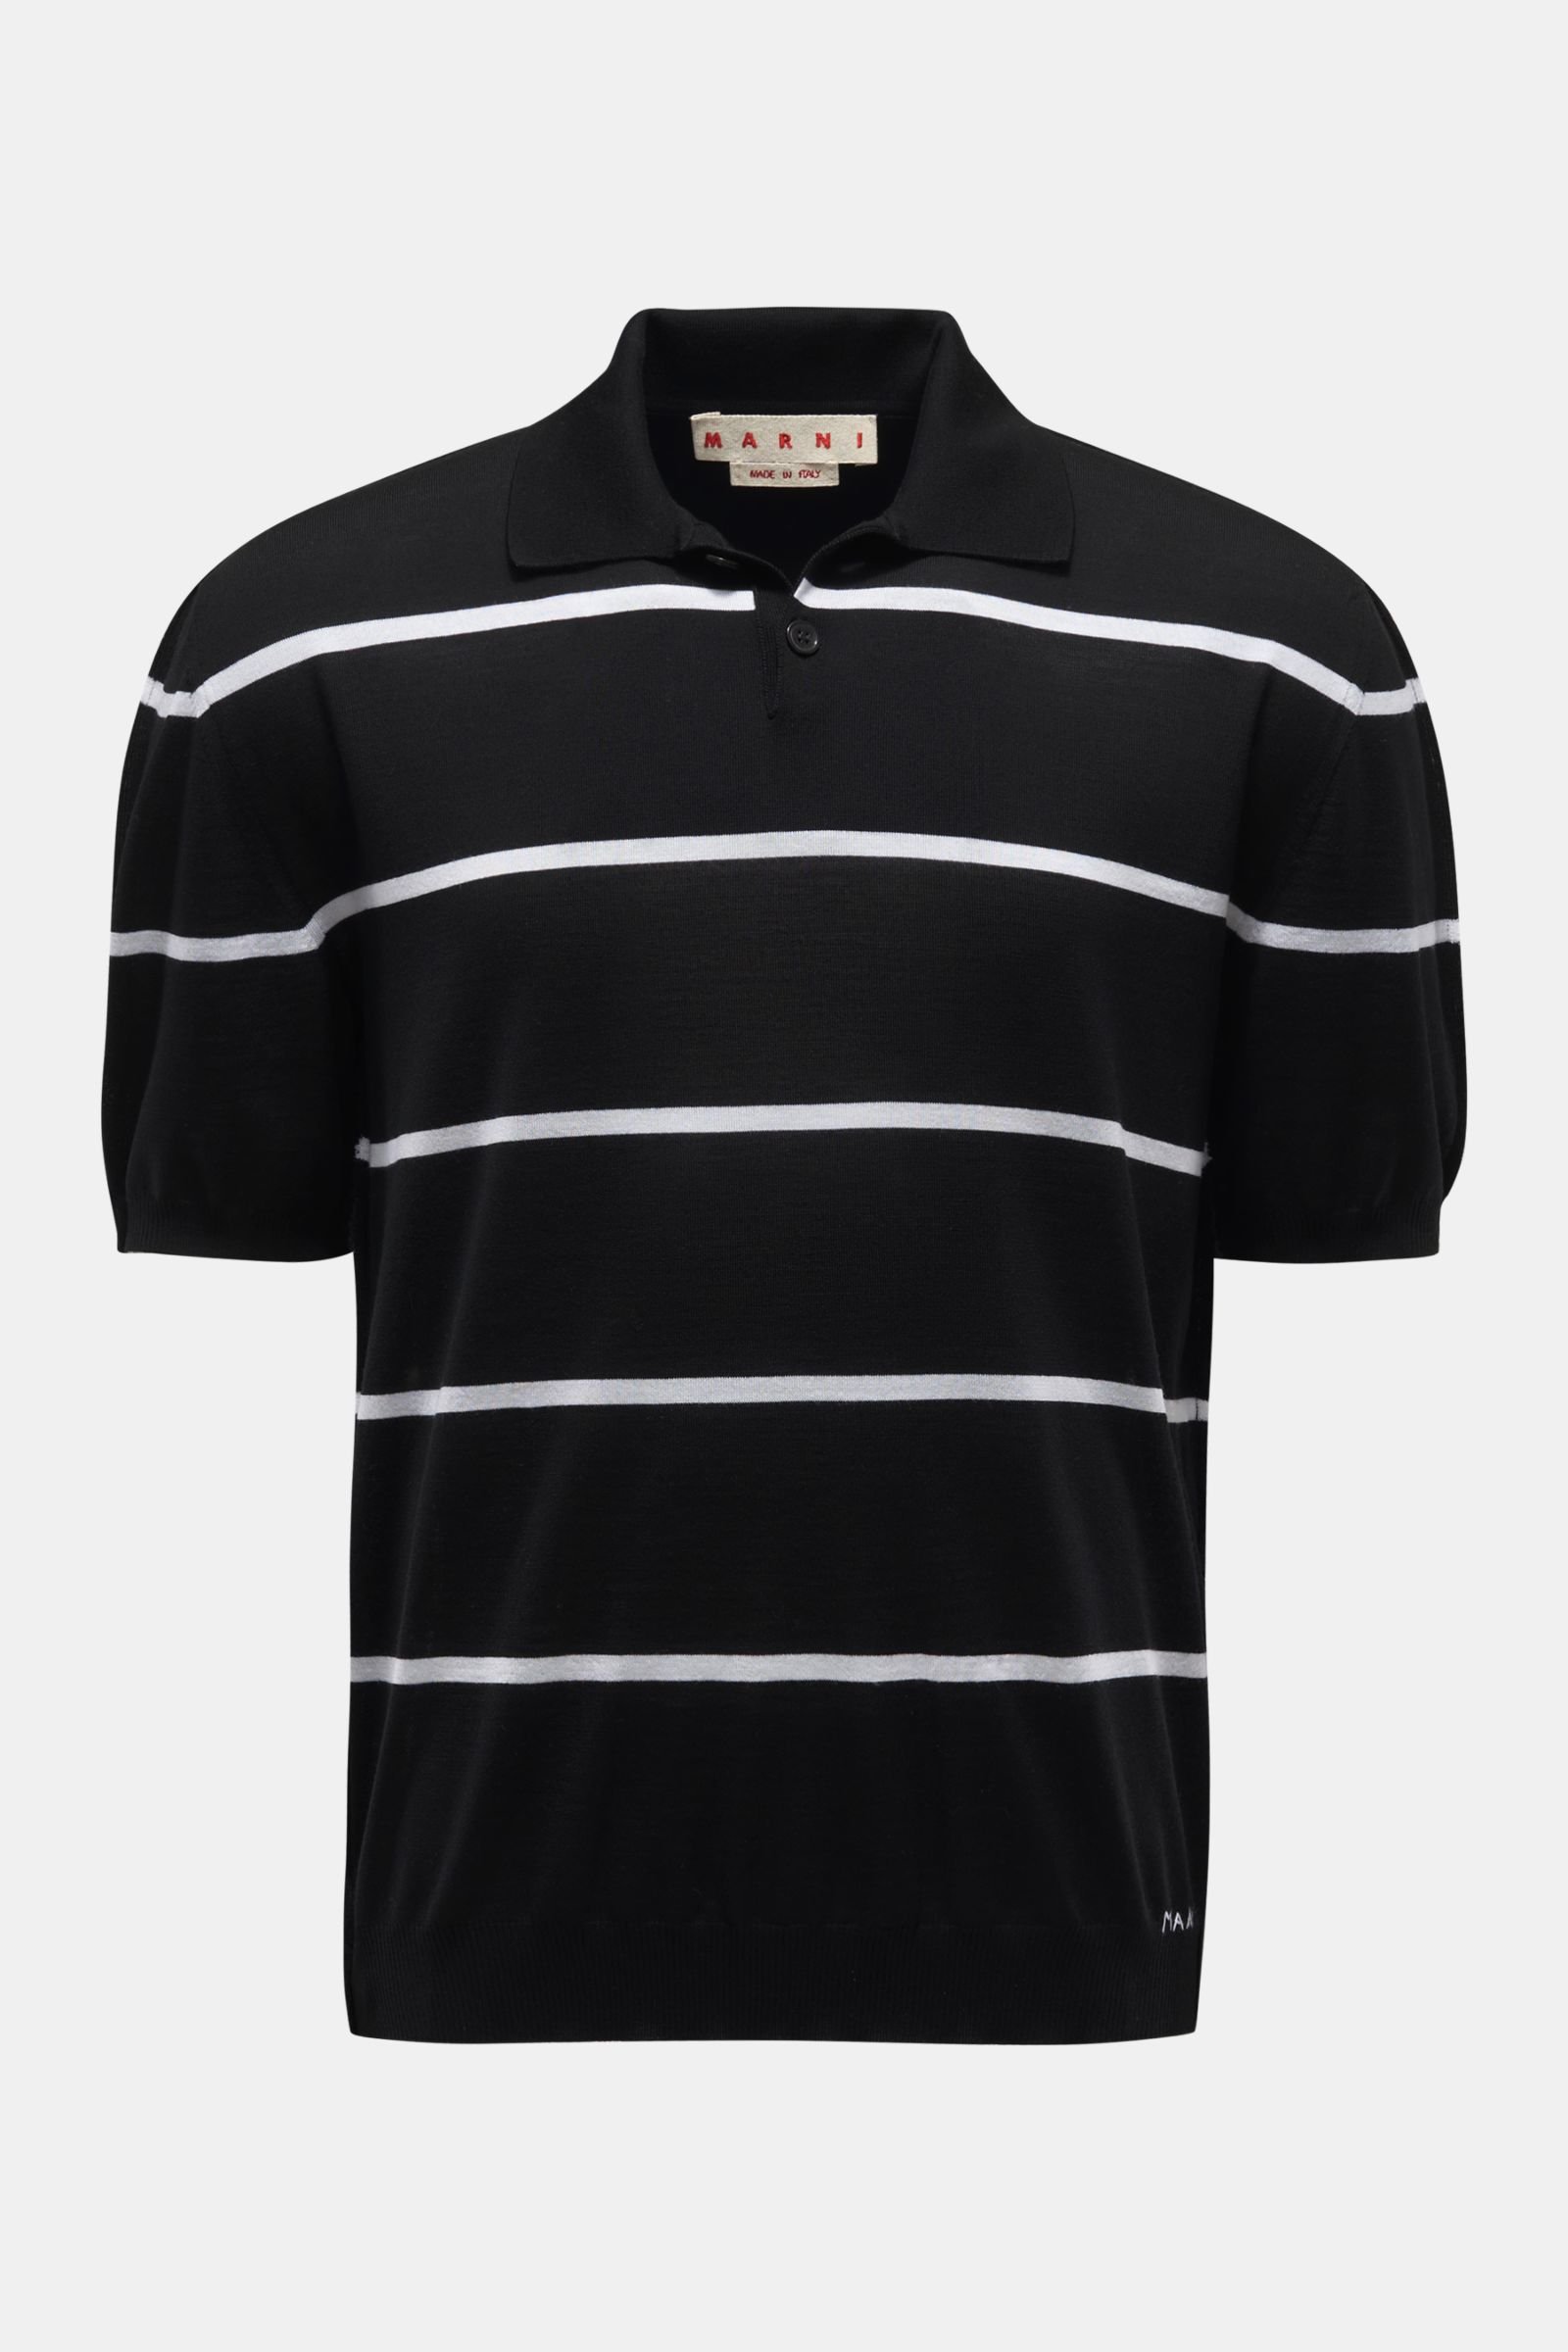 Short sleeve knit polo black/white striped